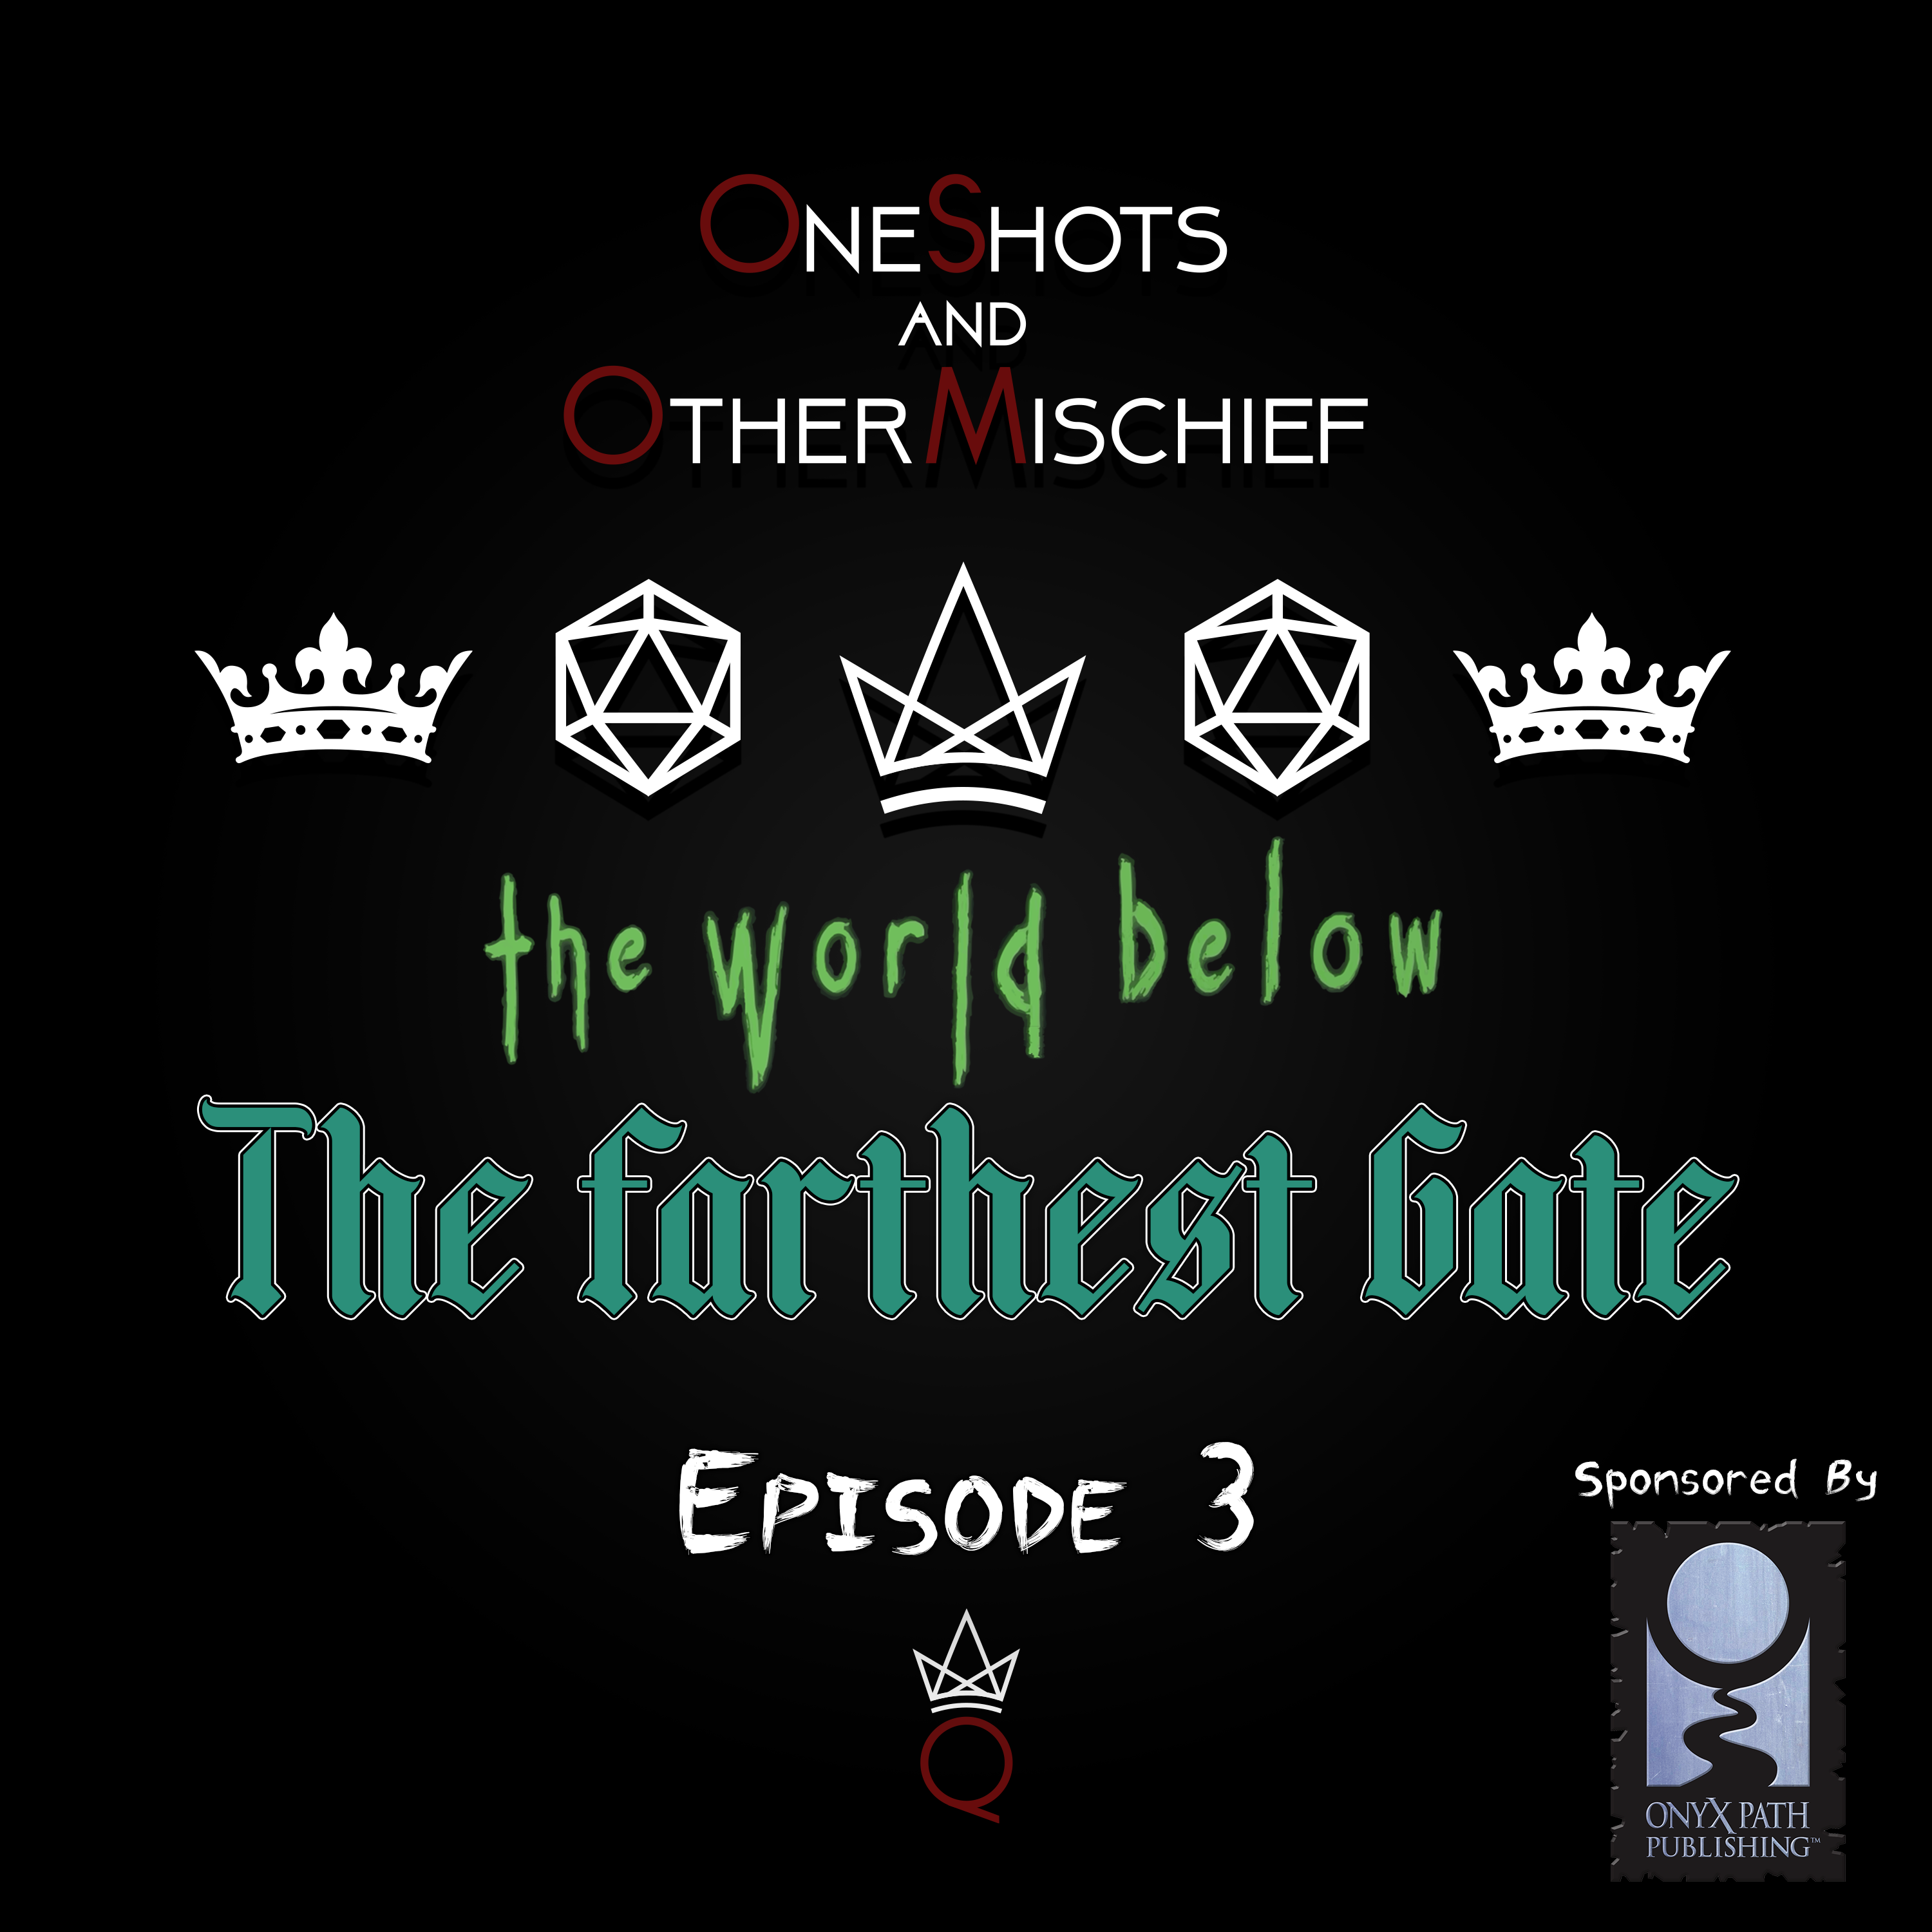 The World Below - The Farthest Gate, Episode 3